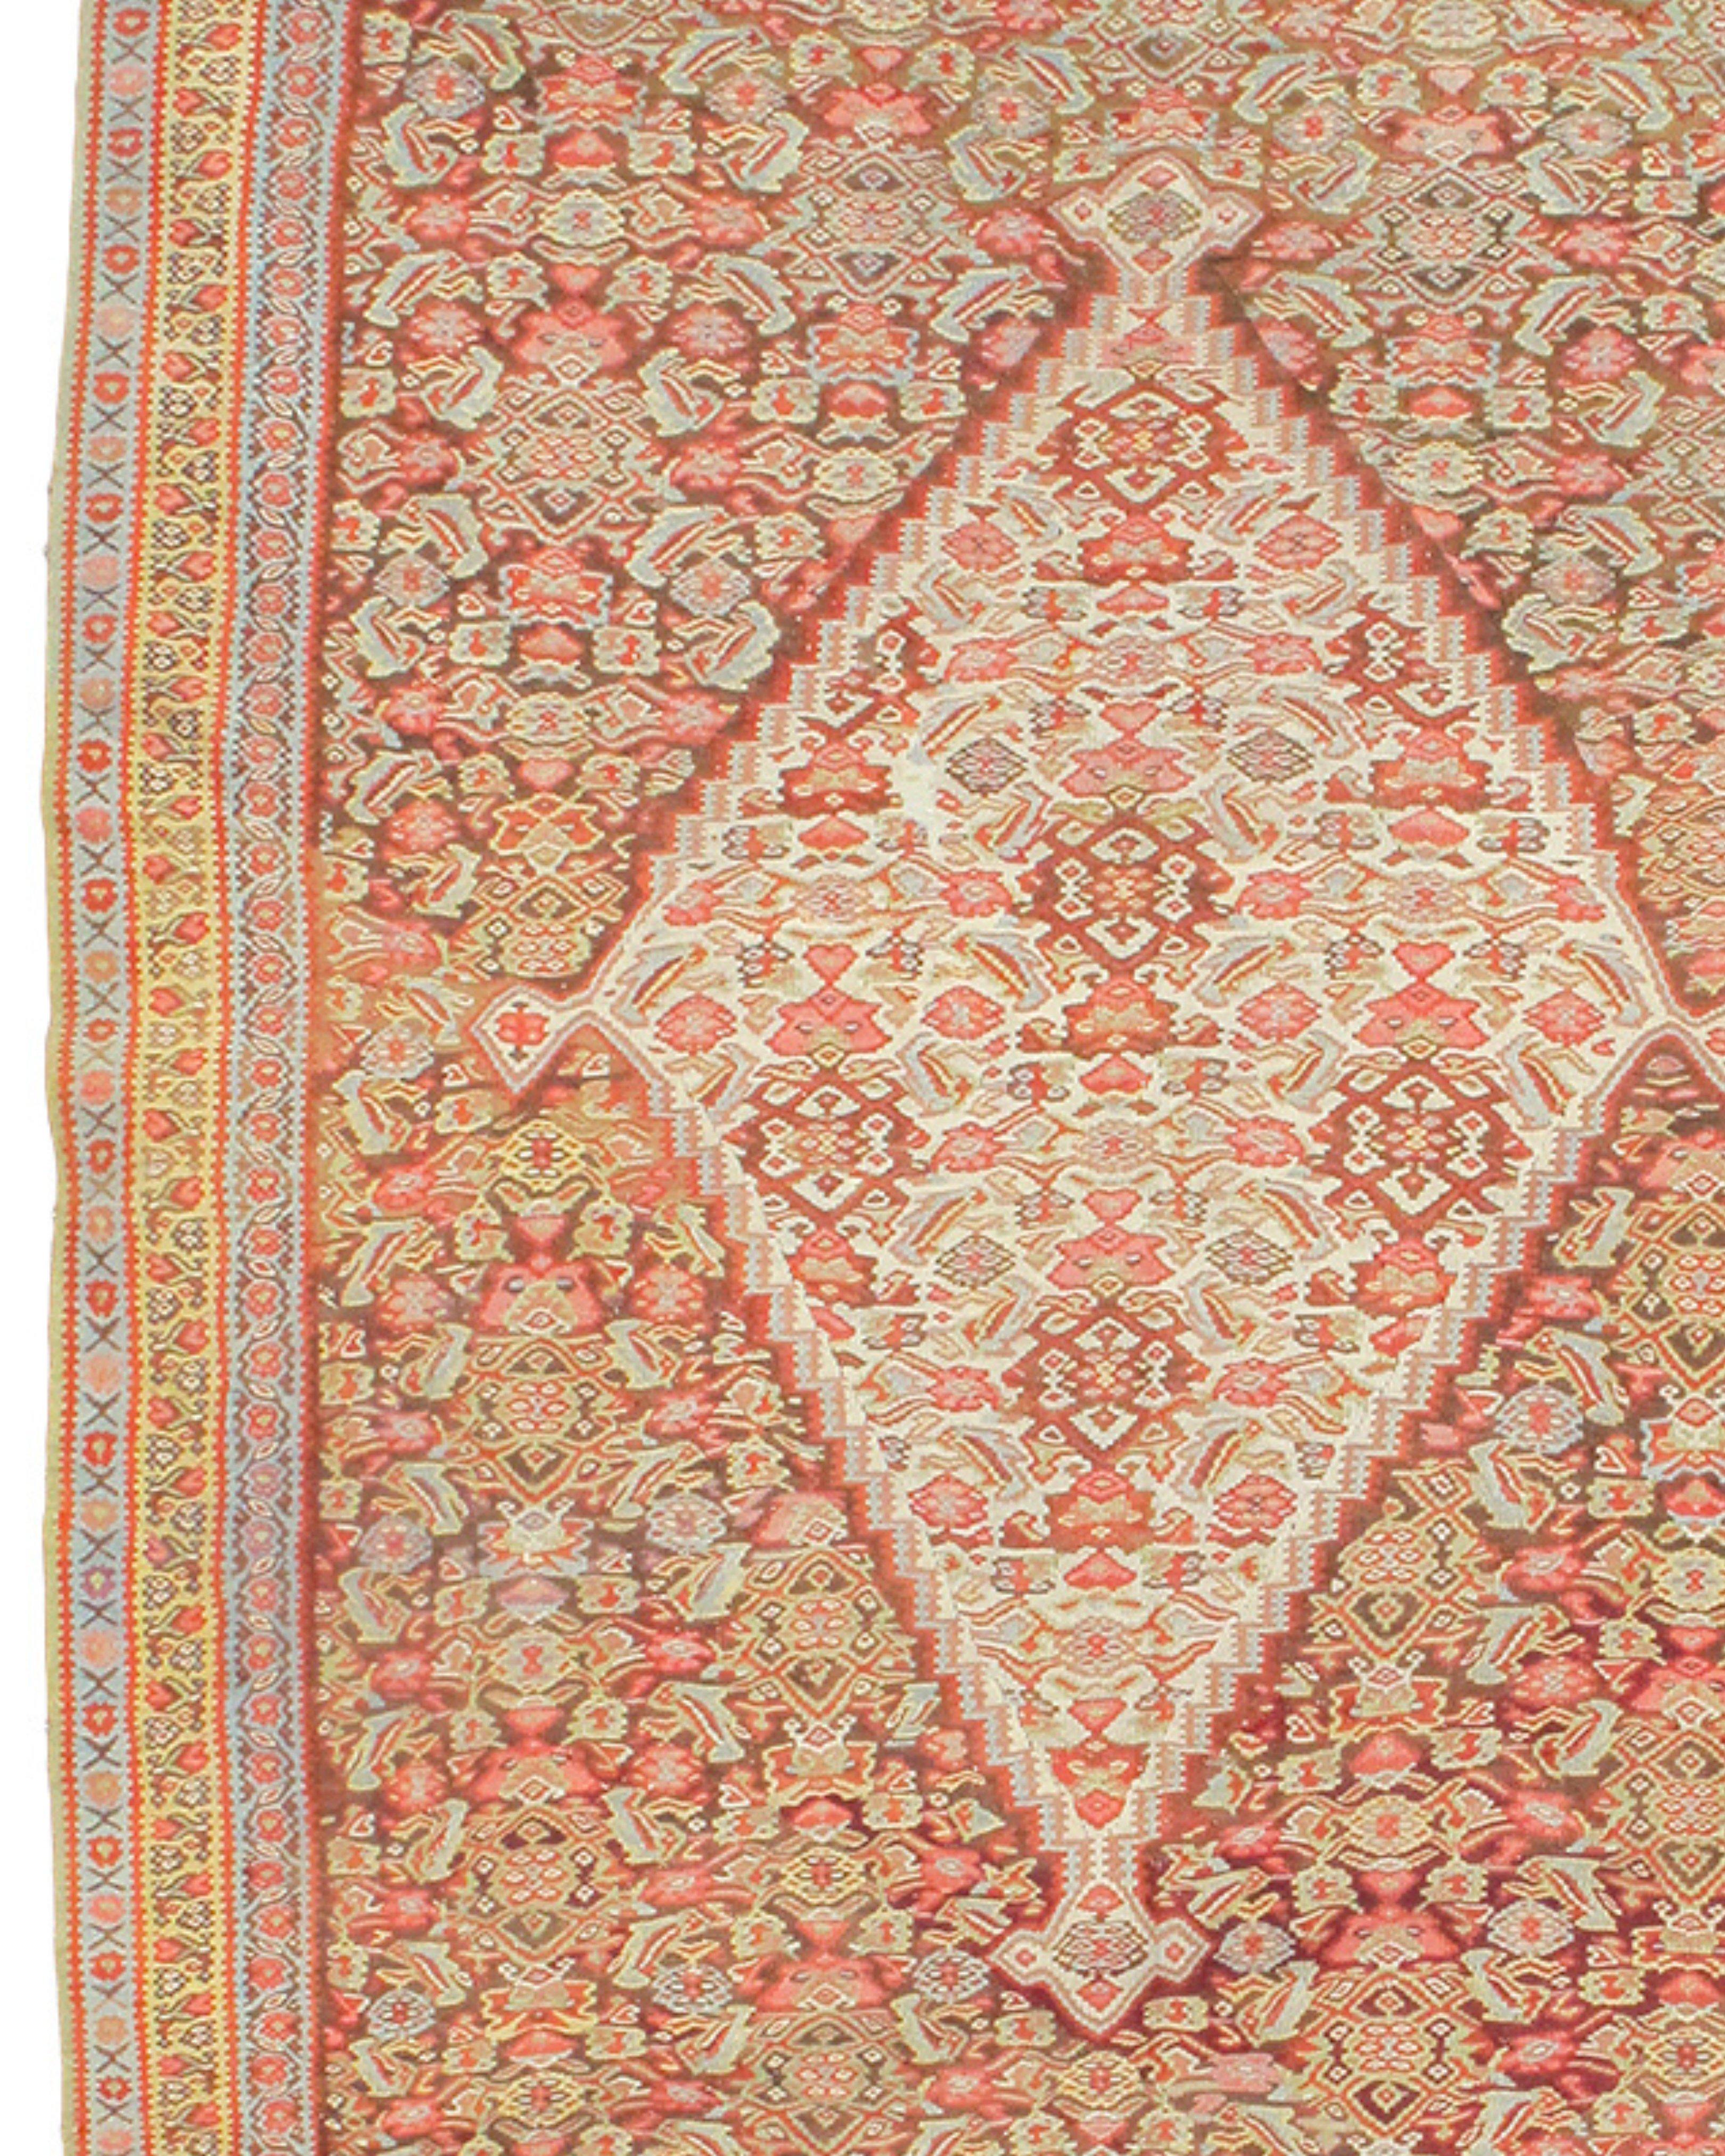 Antique Persian Senneh Kilim Rug, c. 1900

Additional Information:
Dimensions: 4'2